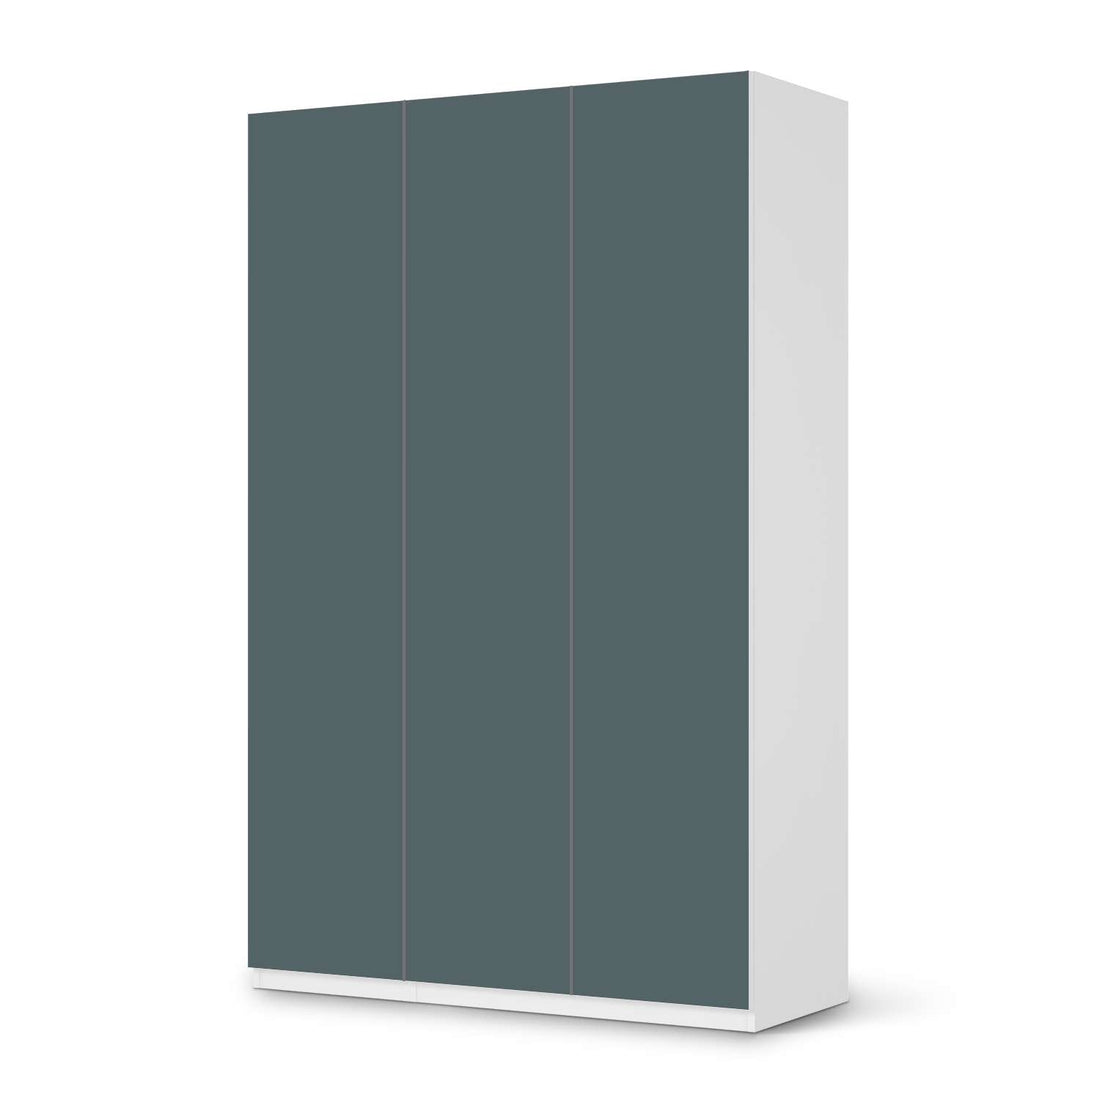 Selbstklebende Folie Blaugrau Light - IKEA Pax Schrank 236 cm Höhe - 3 Türen - weiss